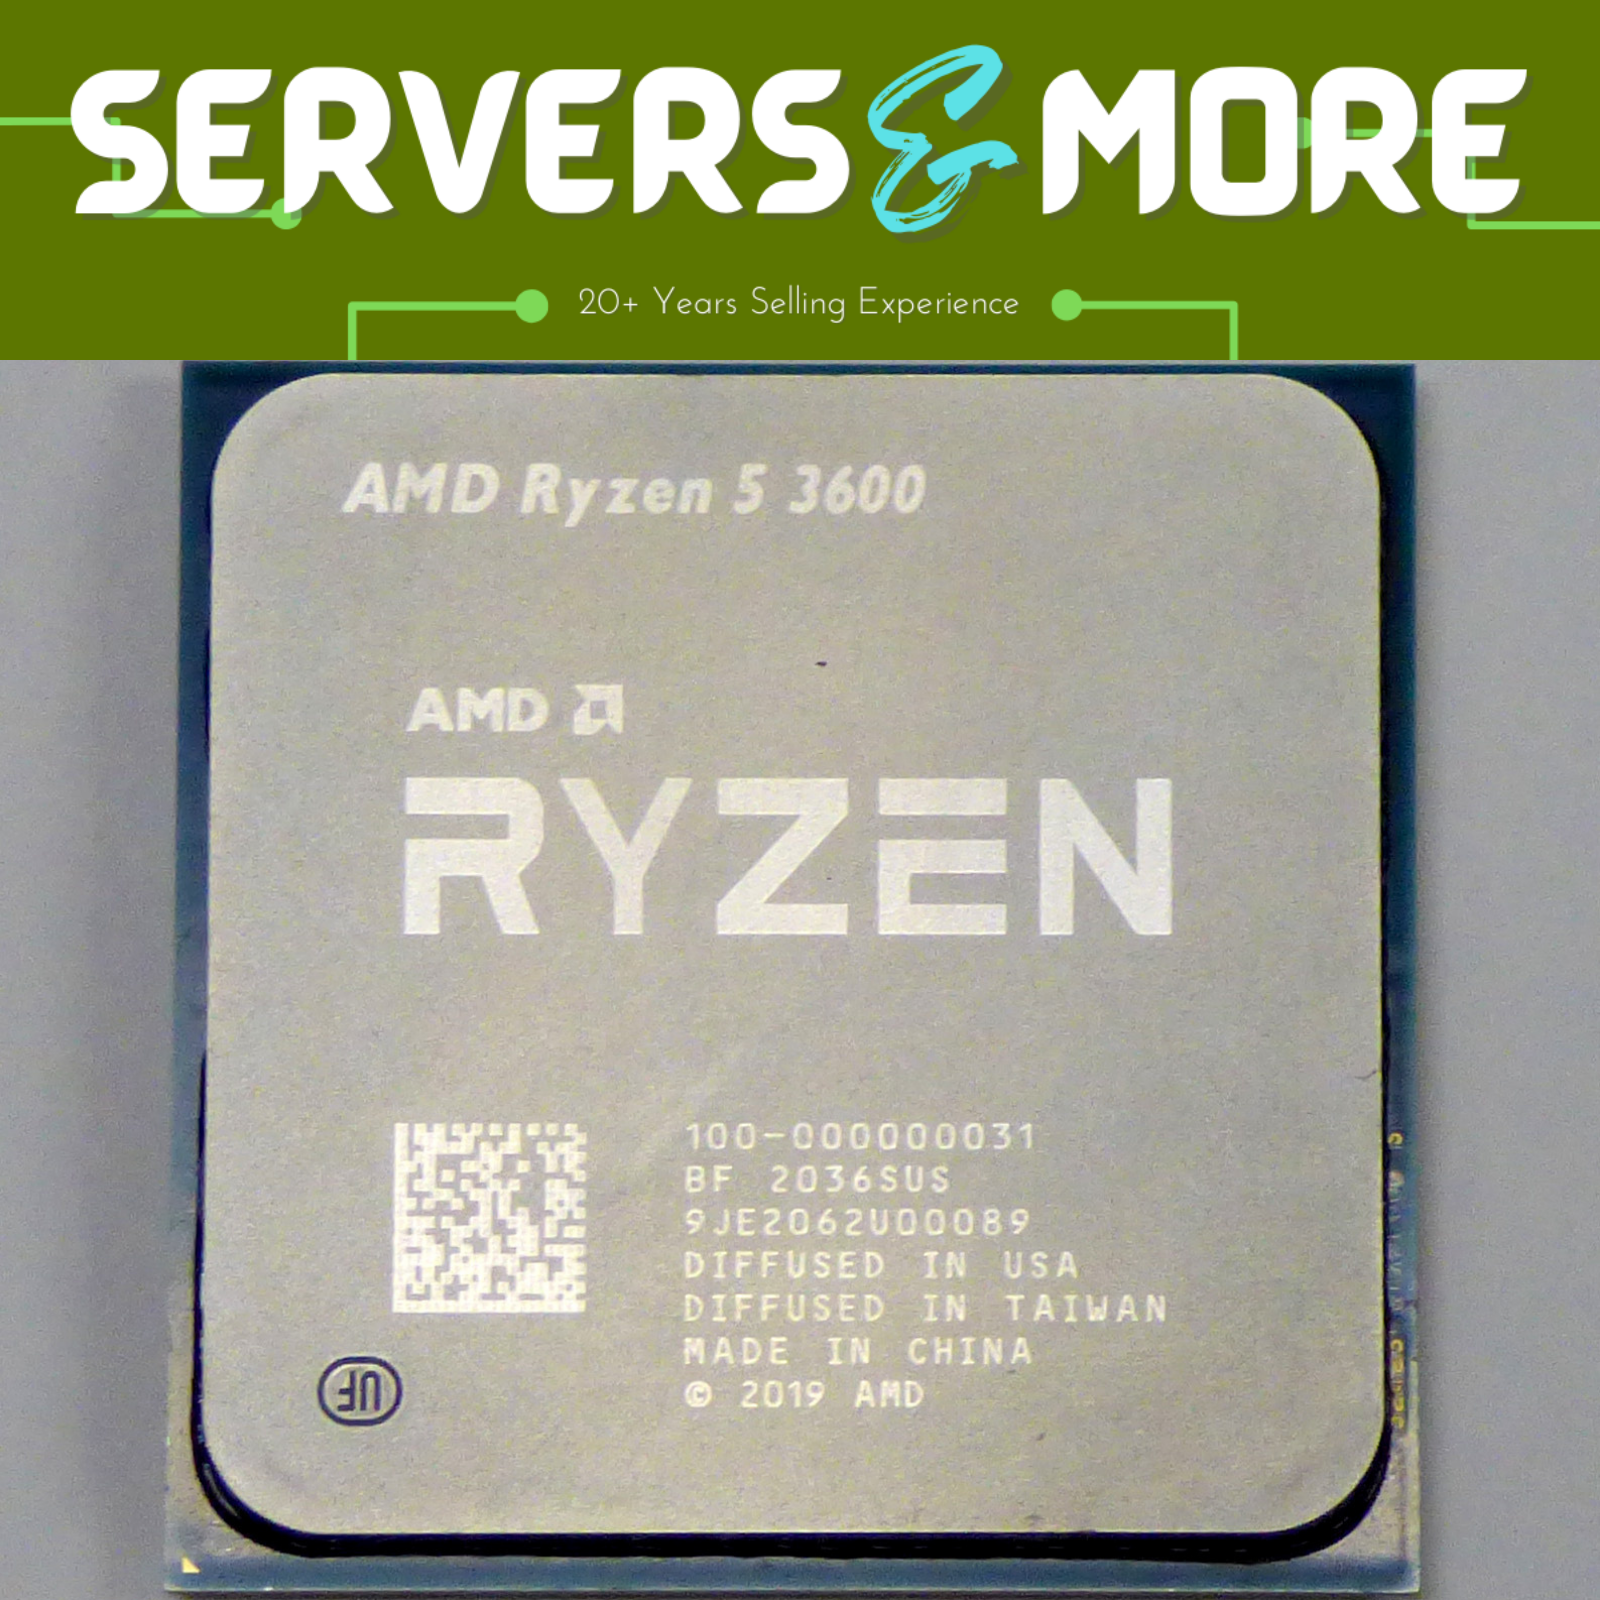 AMD Ryzen 5 3600 Computer Processor for sale online | eBay